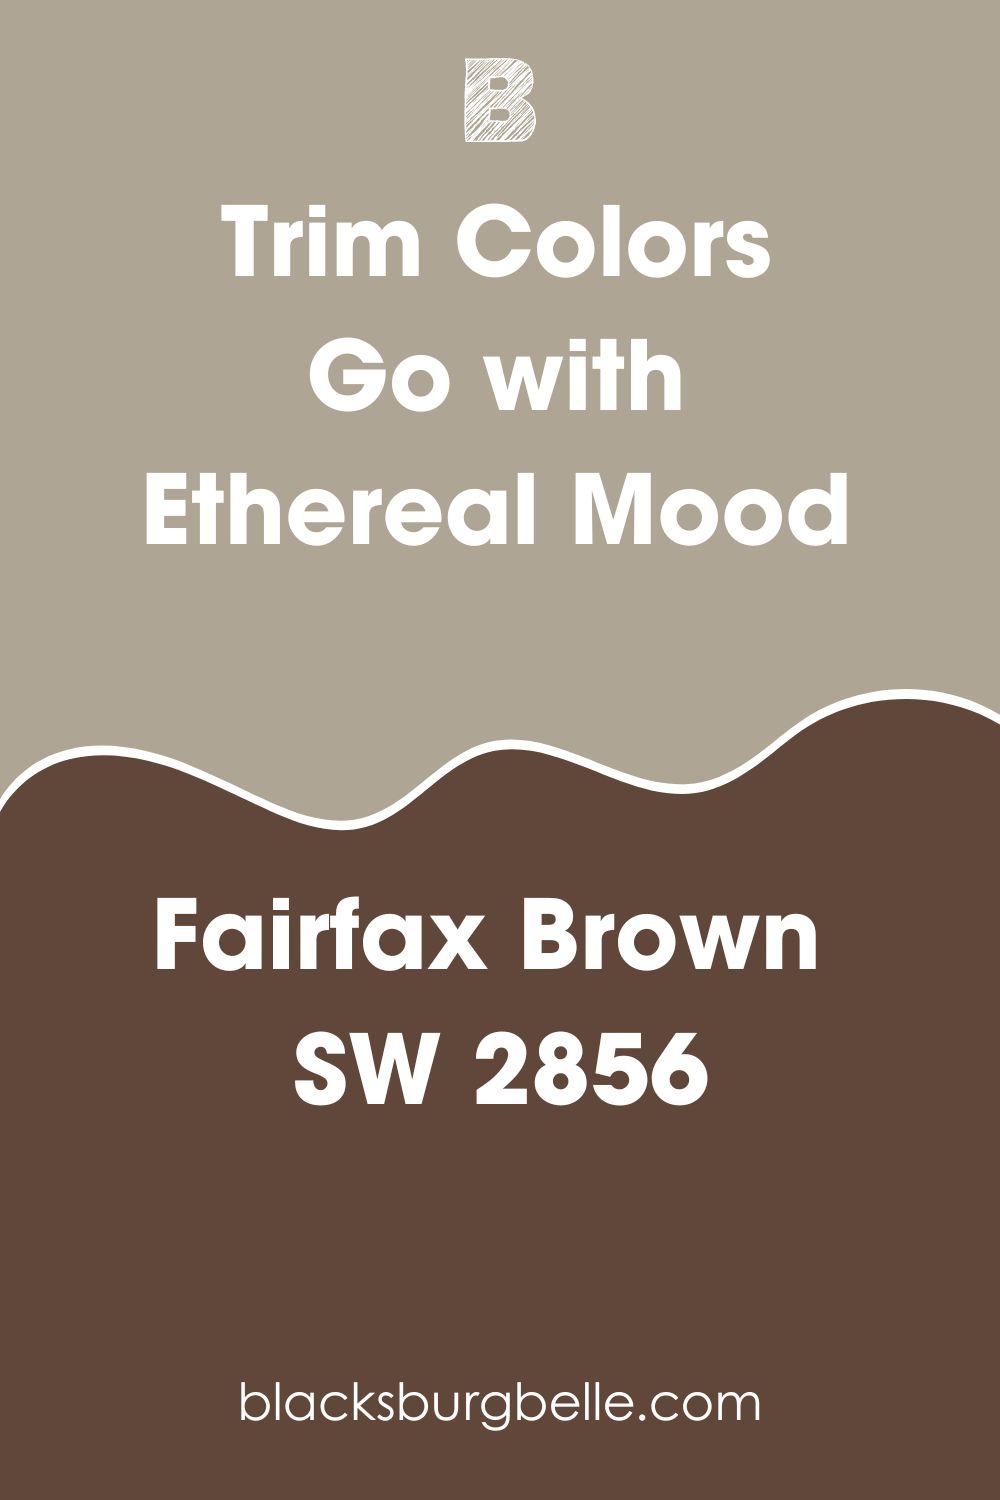 Sherwin Williams Fairfax Brown SW 2856 Work with Sherwin Williams Ethereal Mood